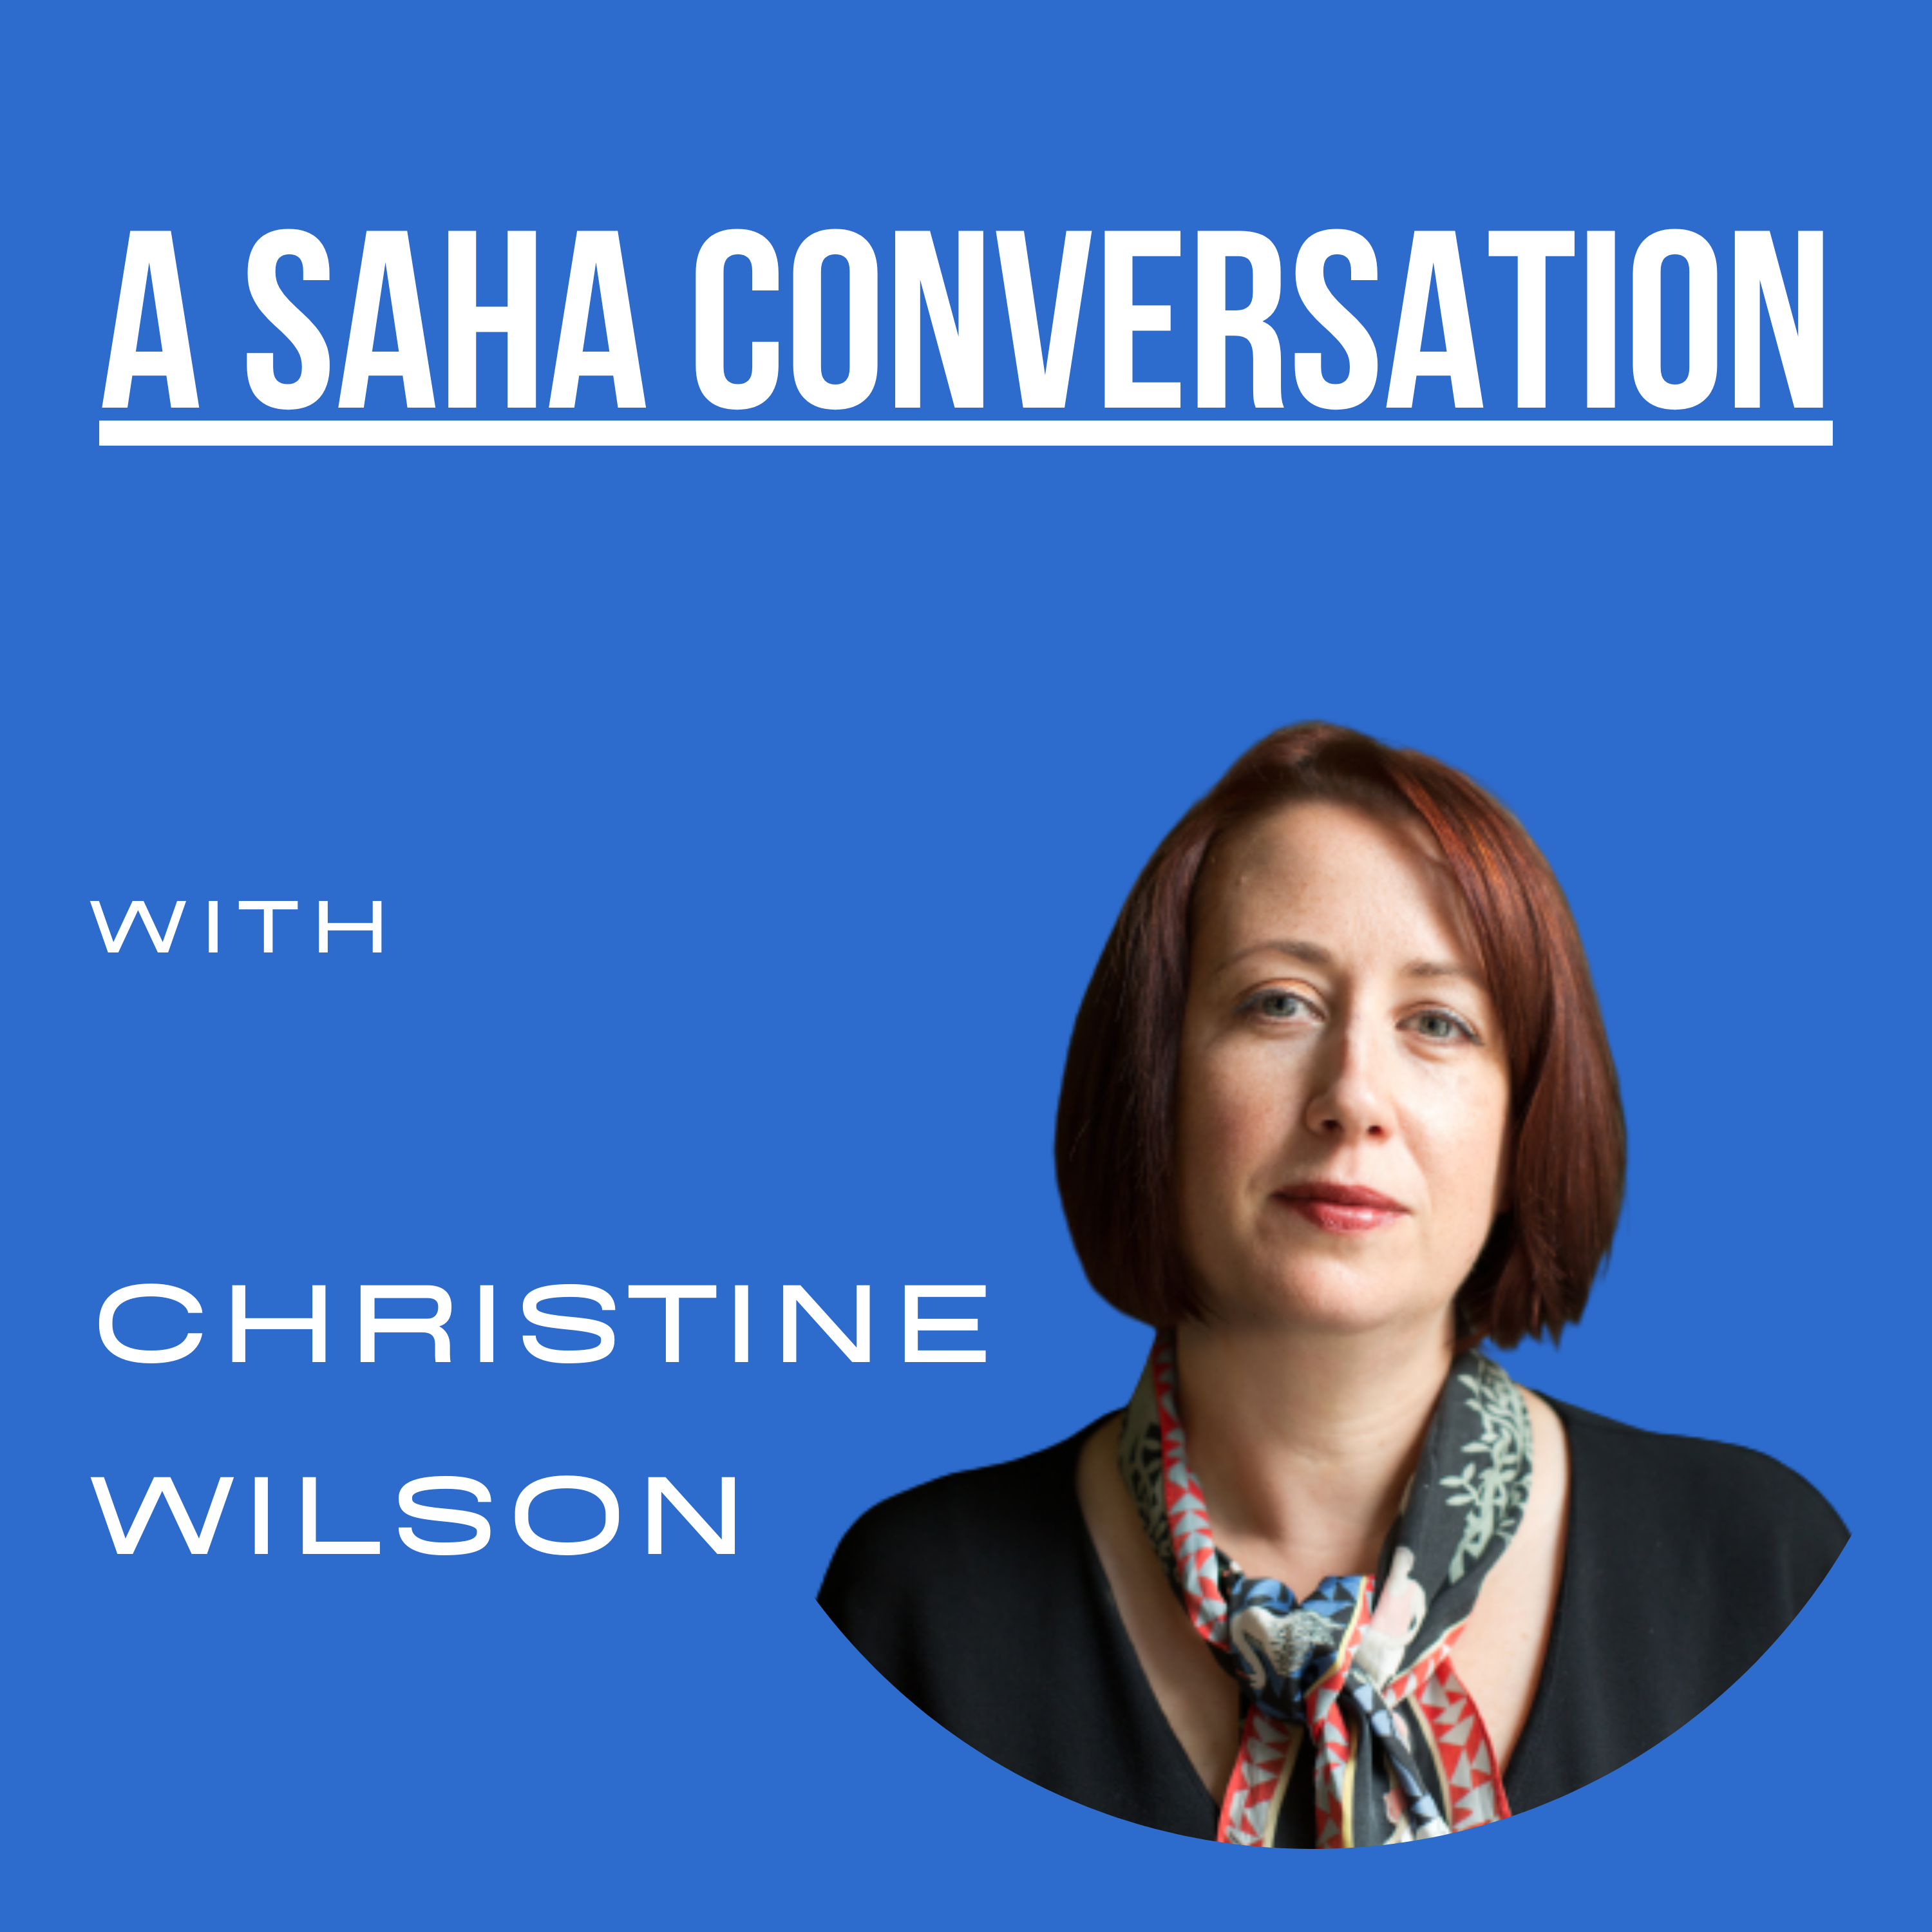 A SAHA Conversation with Christine Wilson